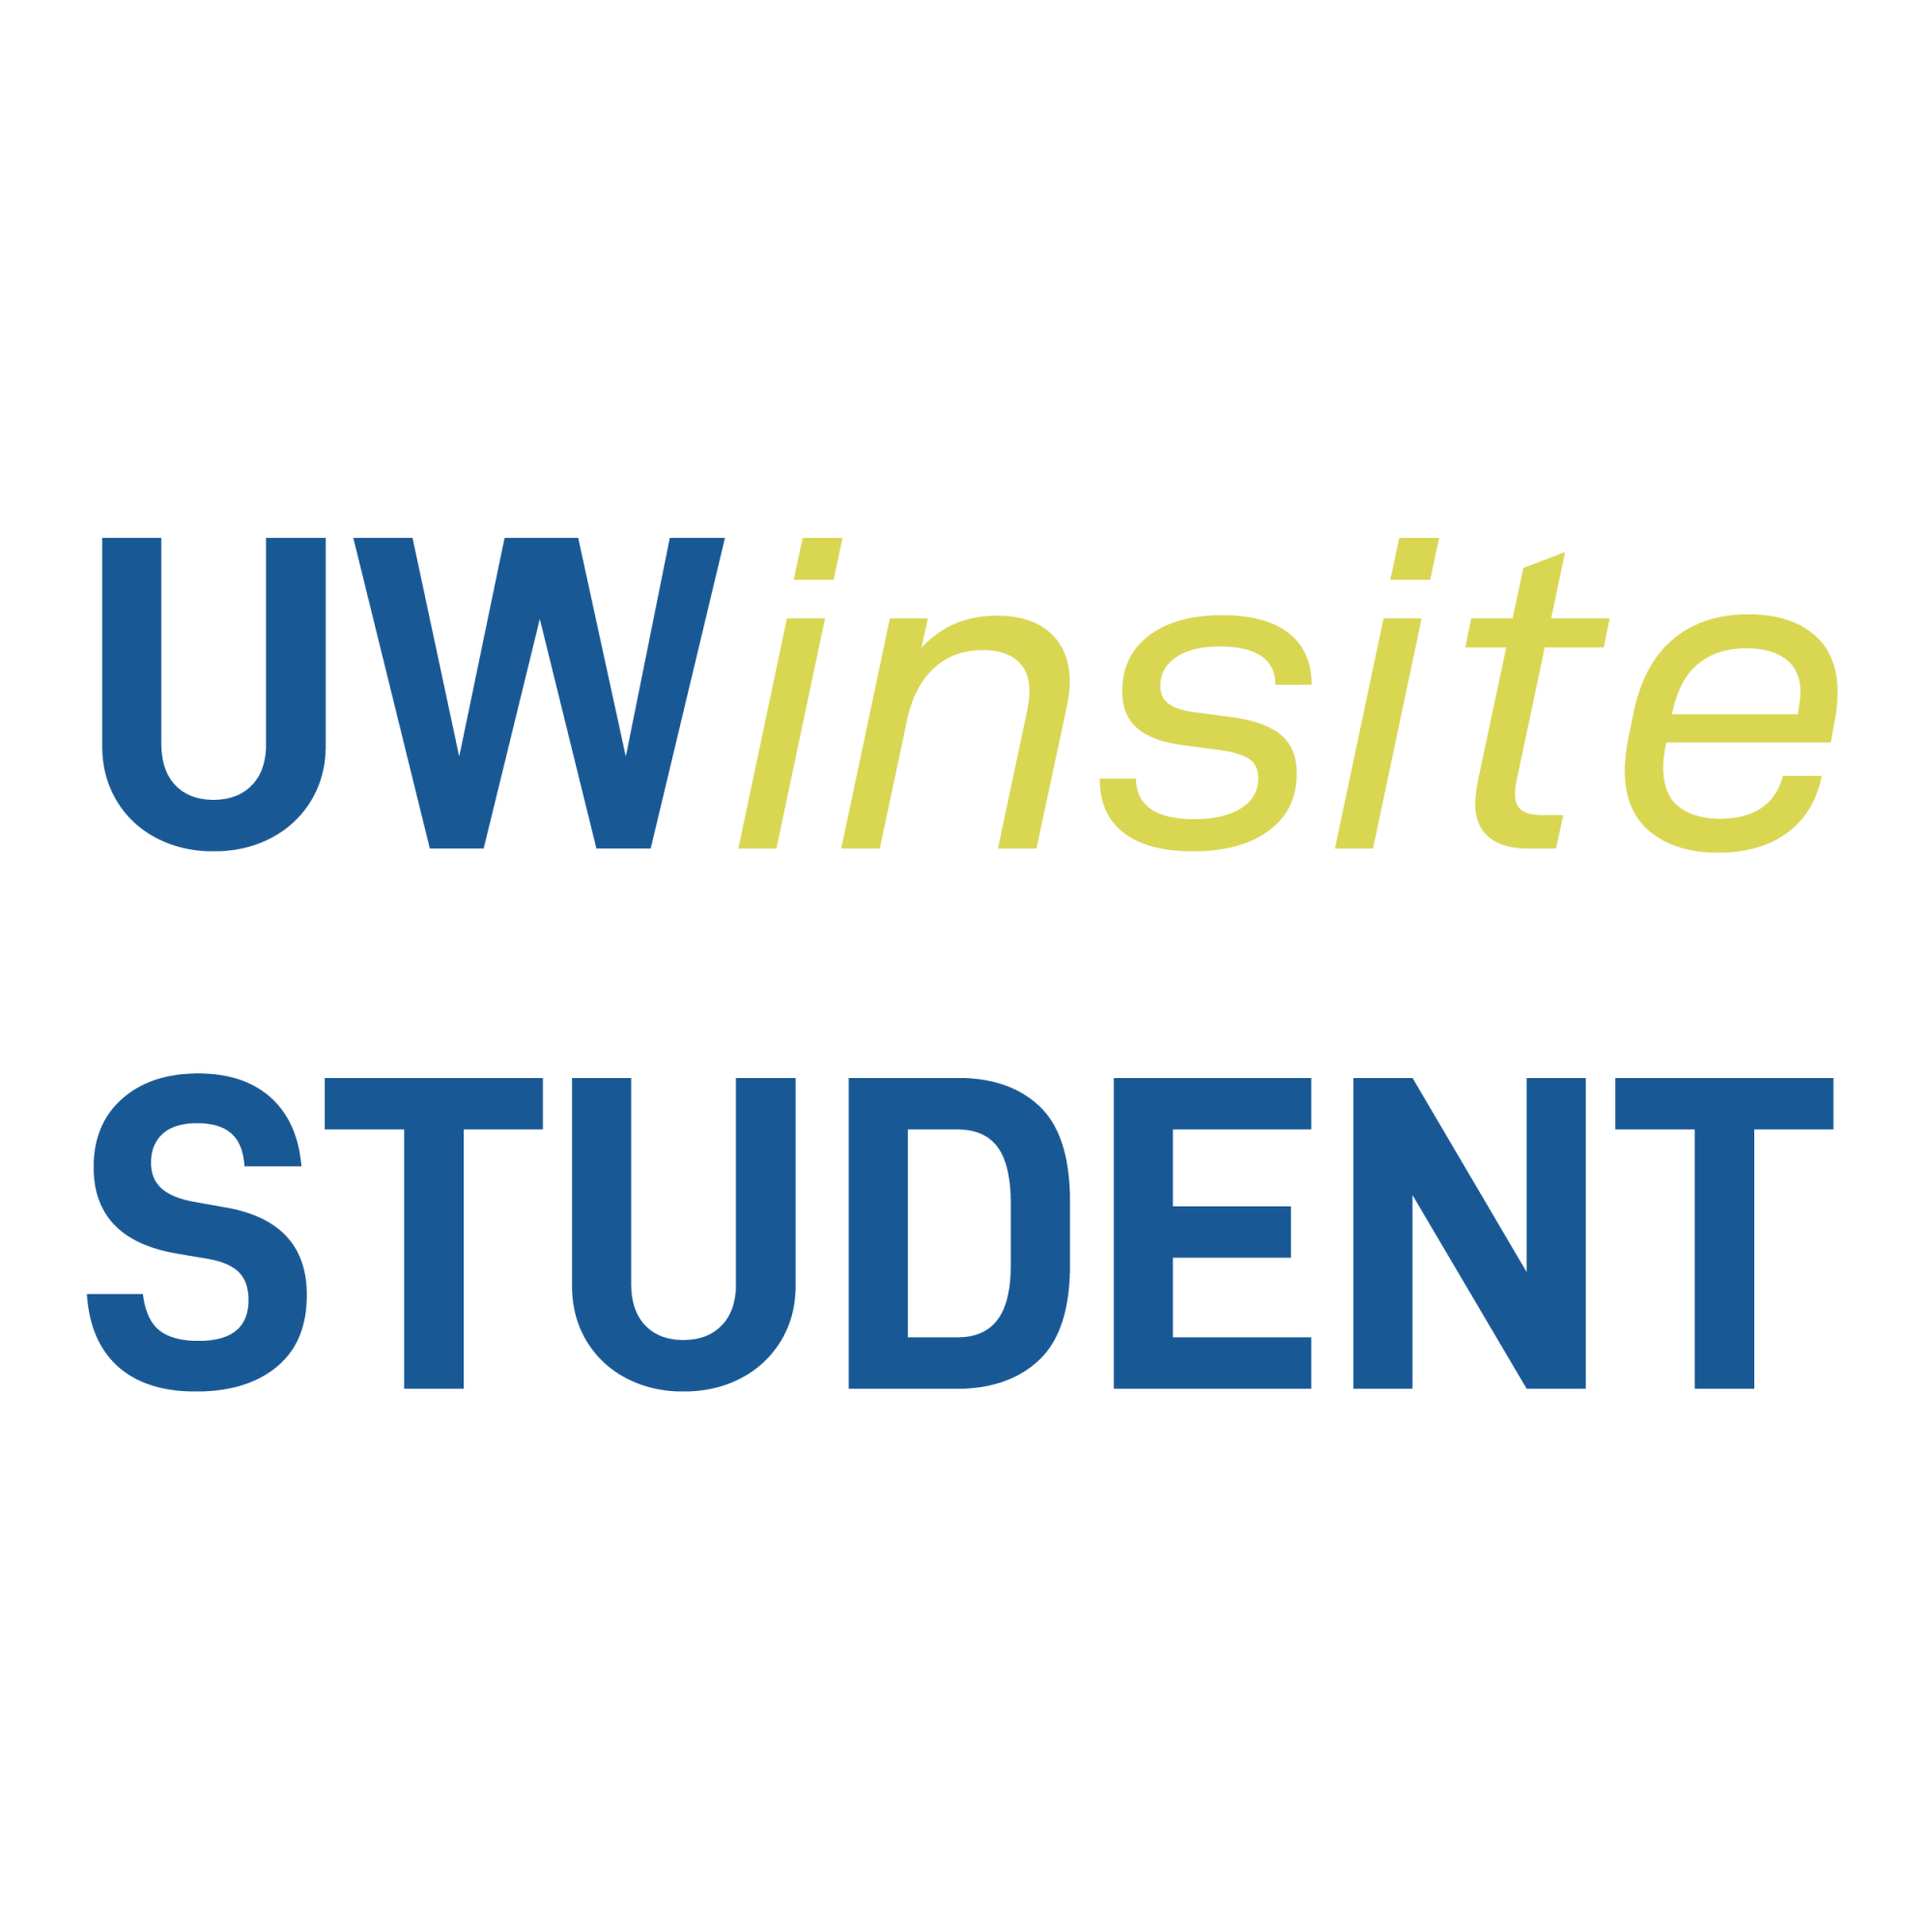 Image of UWinsite Student logo